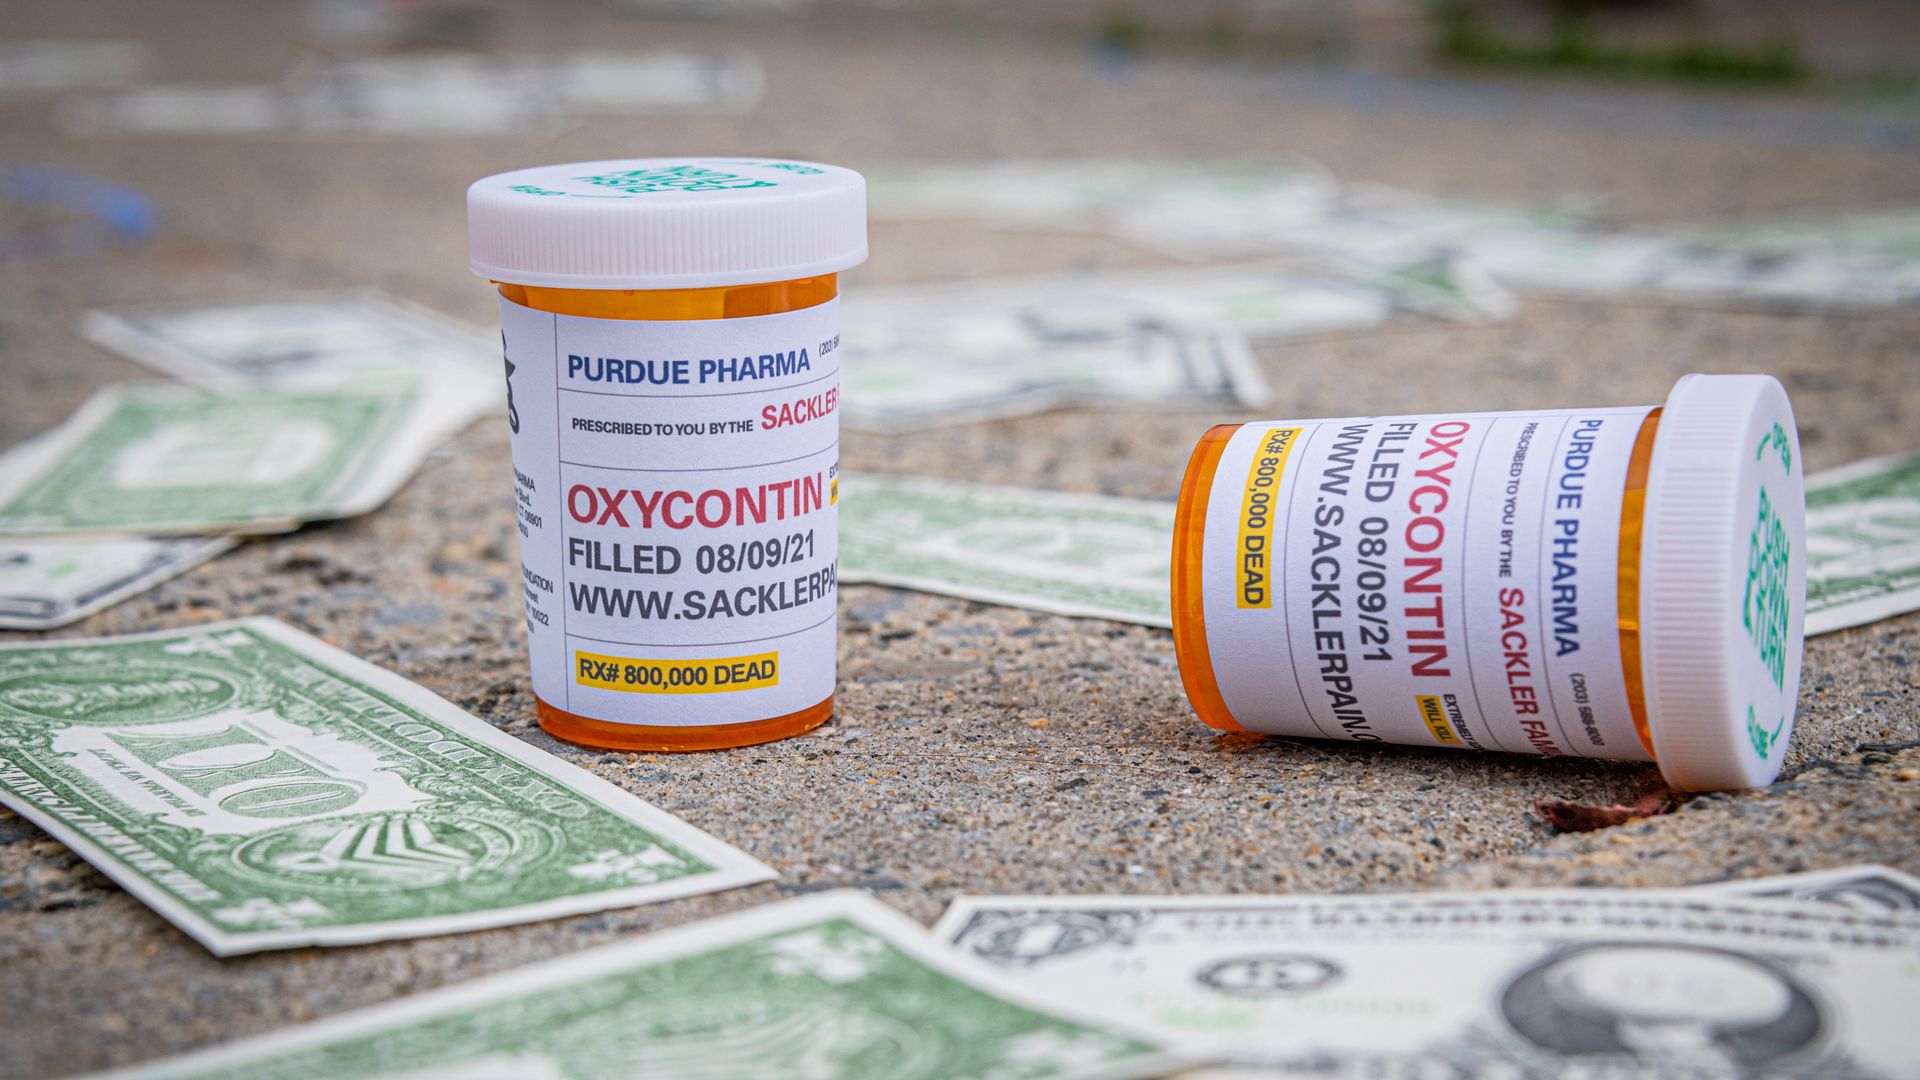 Picture of empty OxyContin prescription bottles